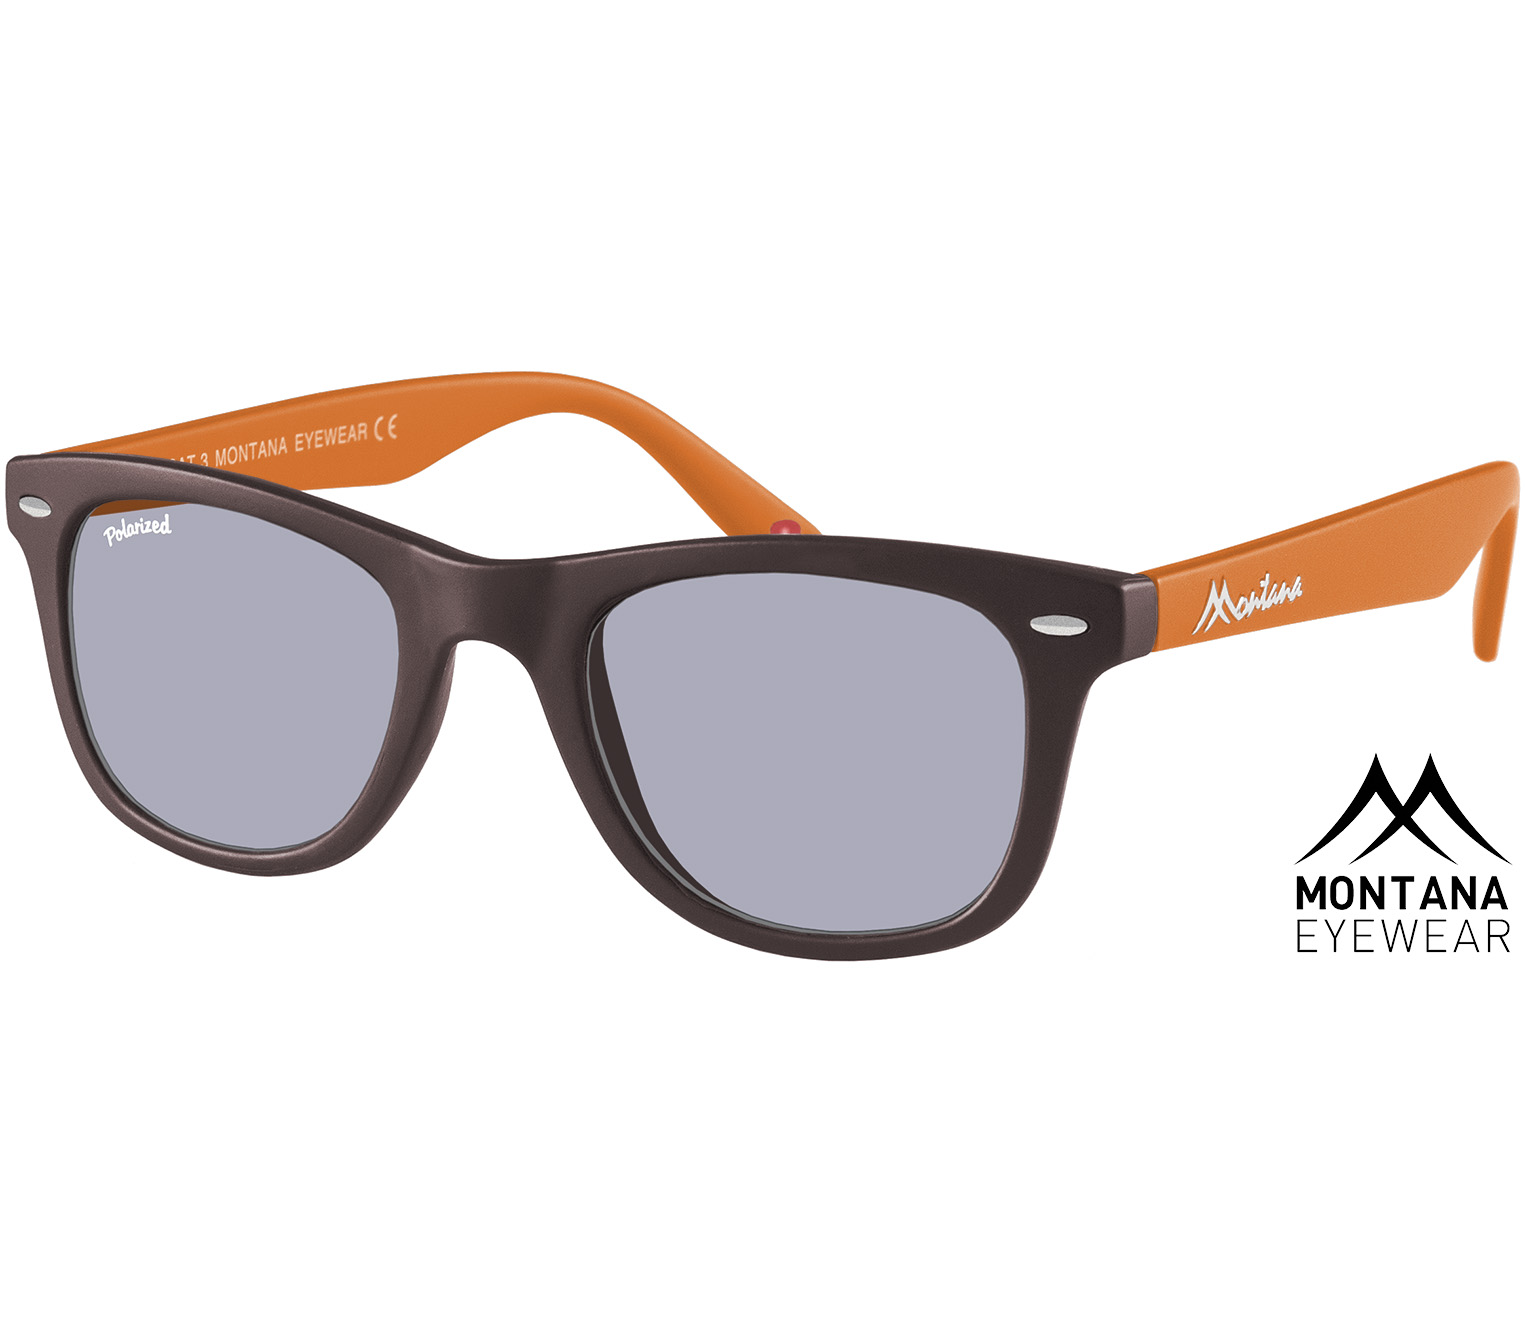 Main Image (Angle) - Valencia (Orange) Wayfarer Sunglasses